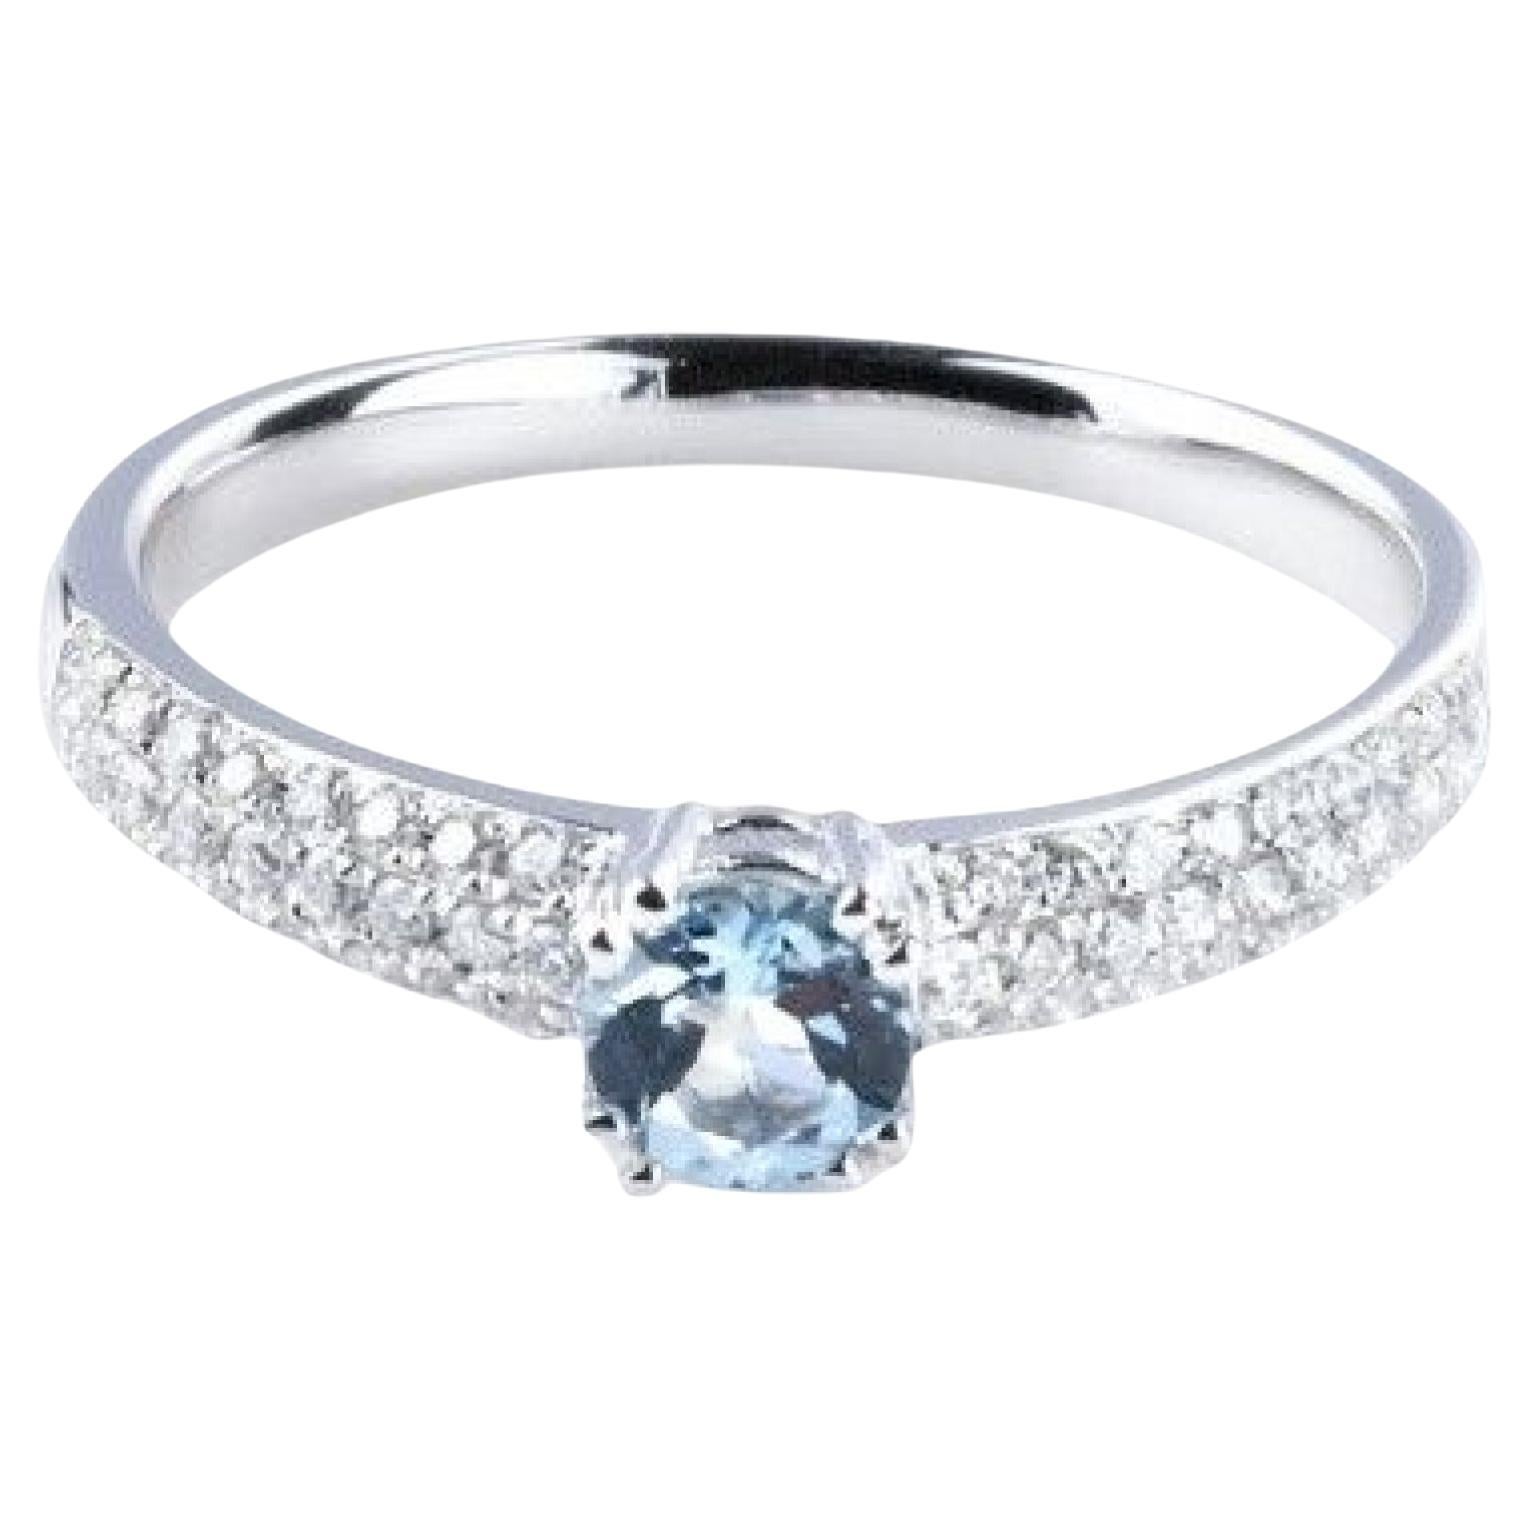 For Sale:  0.335 Carat Aquamarine and Diamond Ring in 14 Karat White Gold